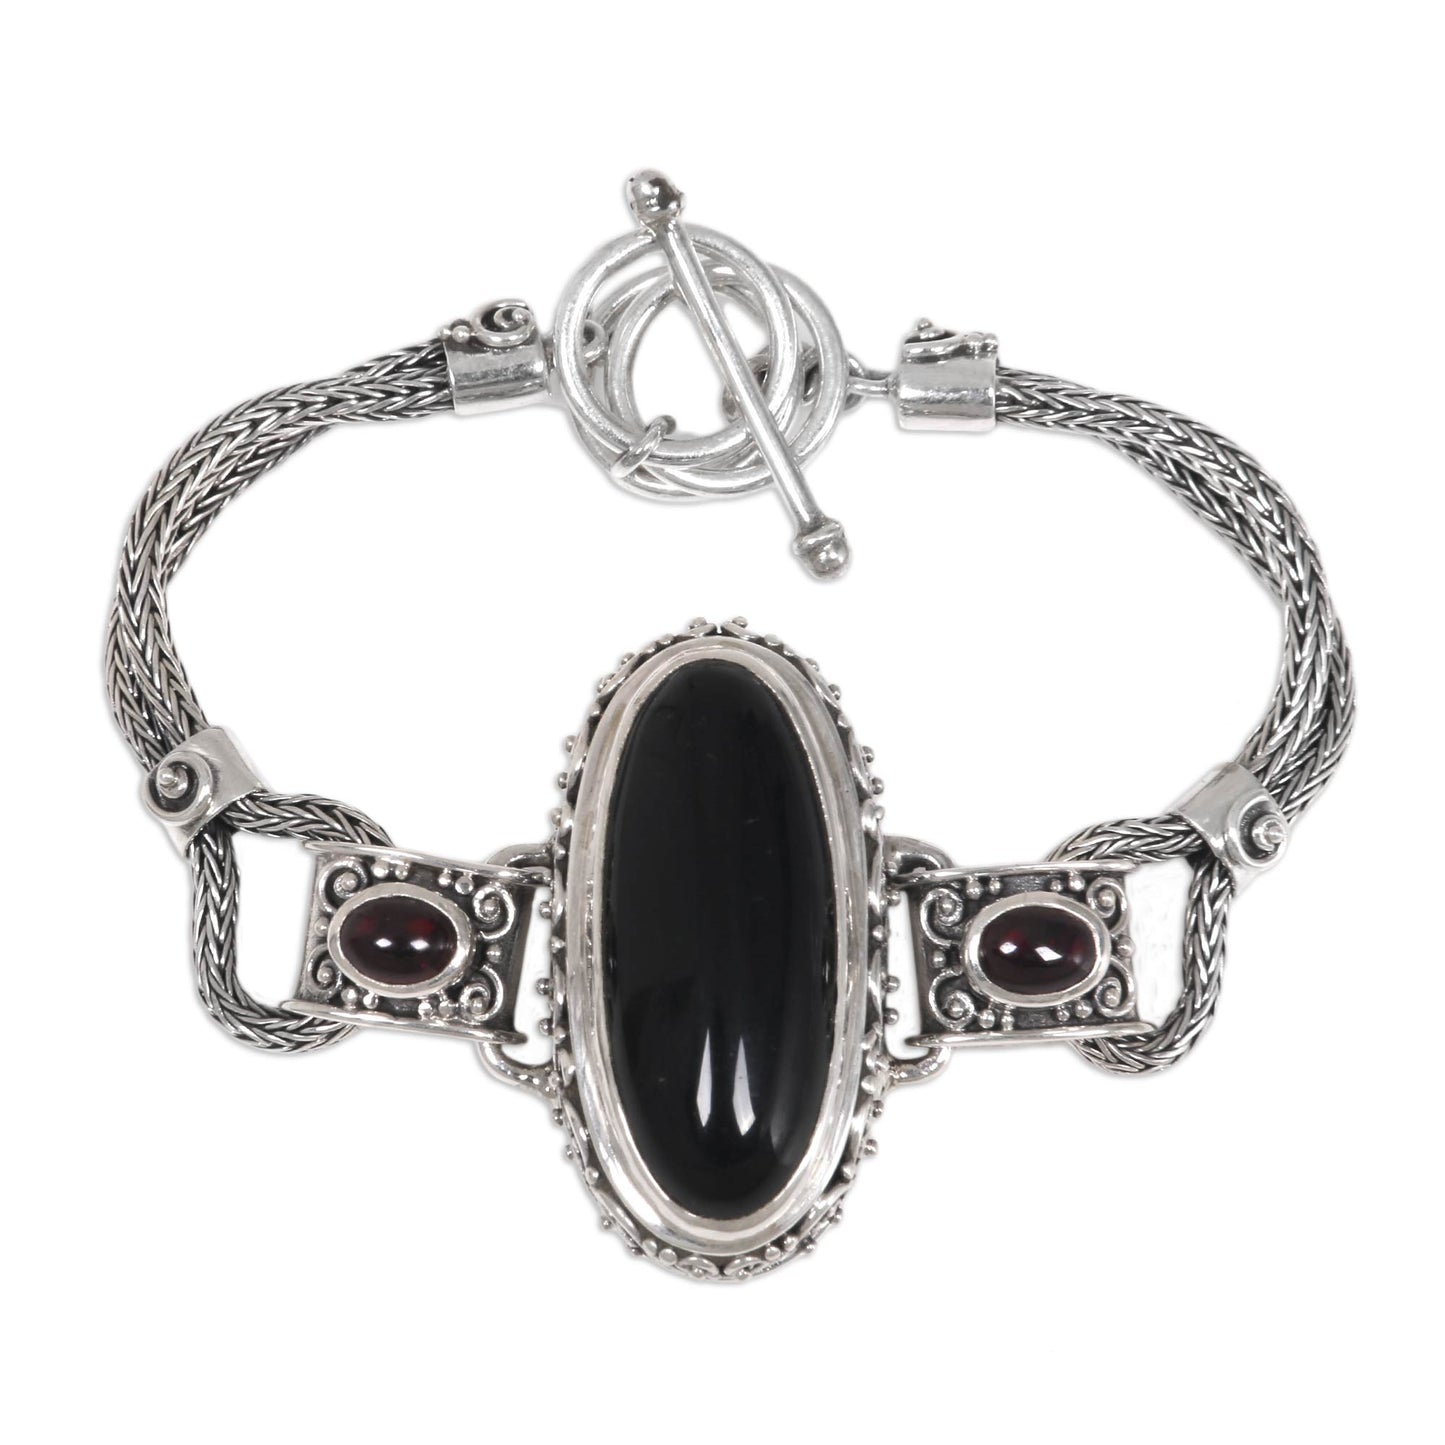 Royal Presence Balinese Style Pendant Bracelet with Onyx and Garnet